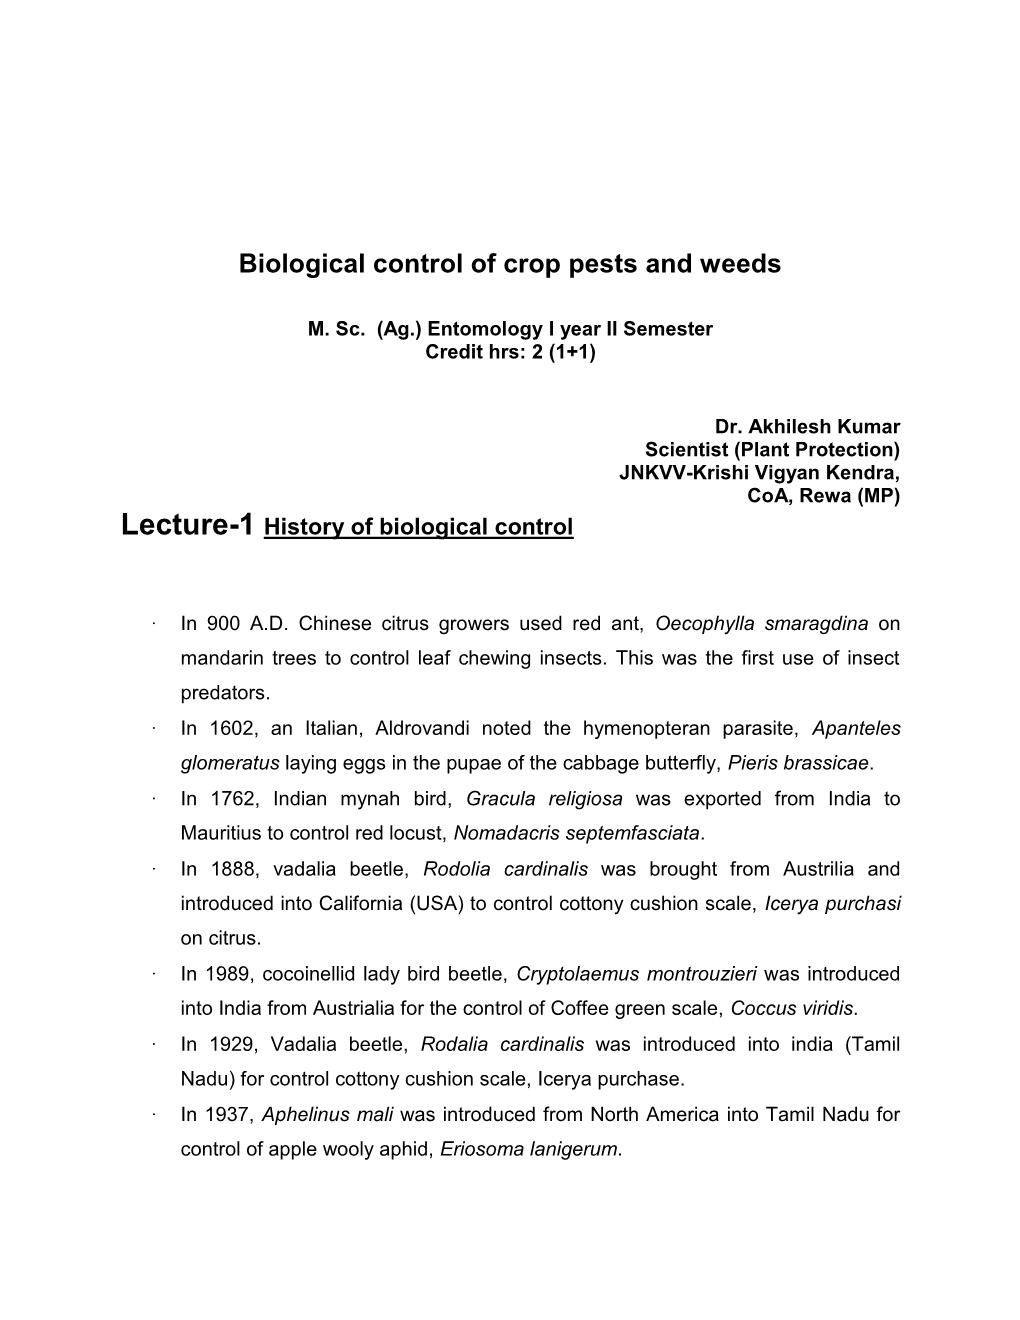 Biological Control of Crop Pests and Weeds